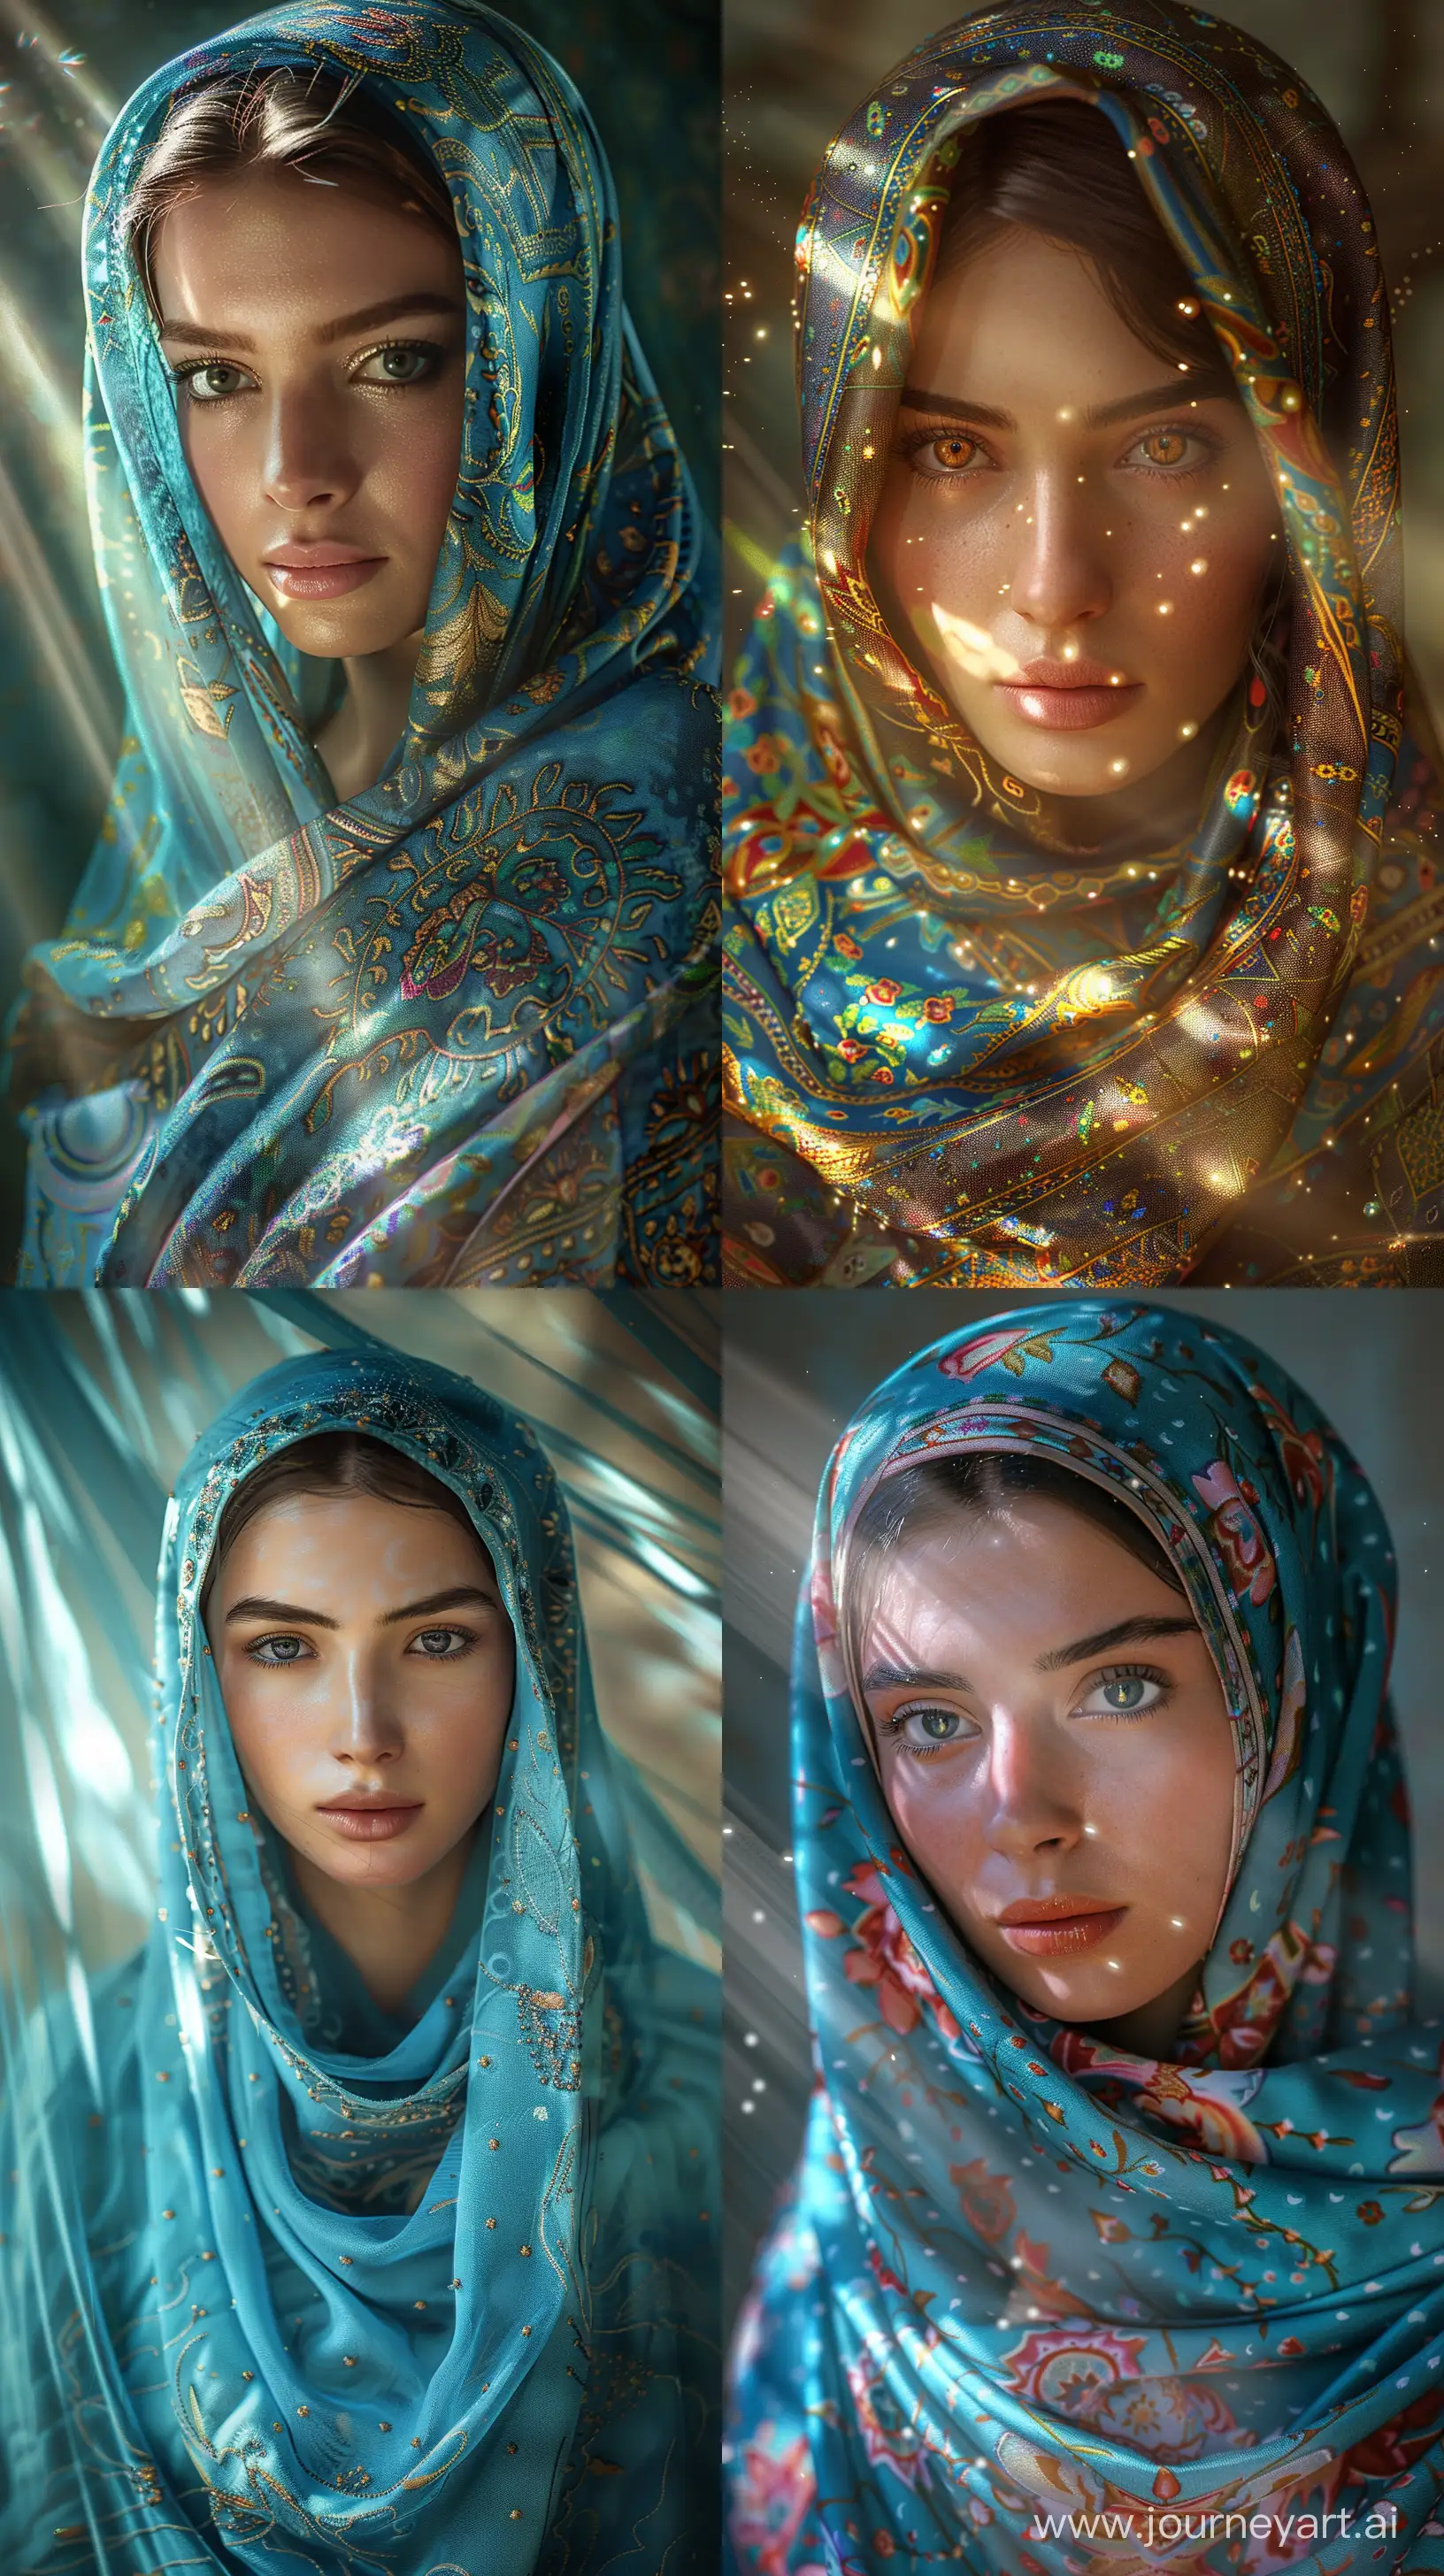 Stunning-Tajik-Woman-in-Traditional-Dress-and-Headscarf